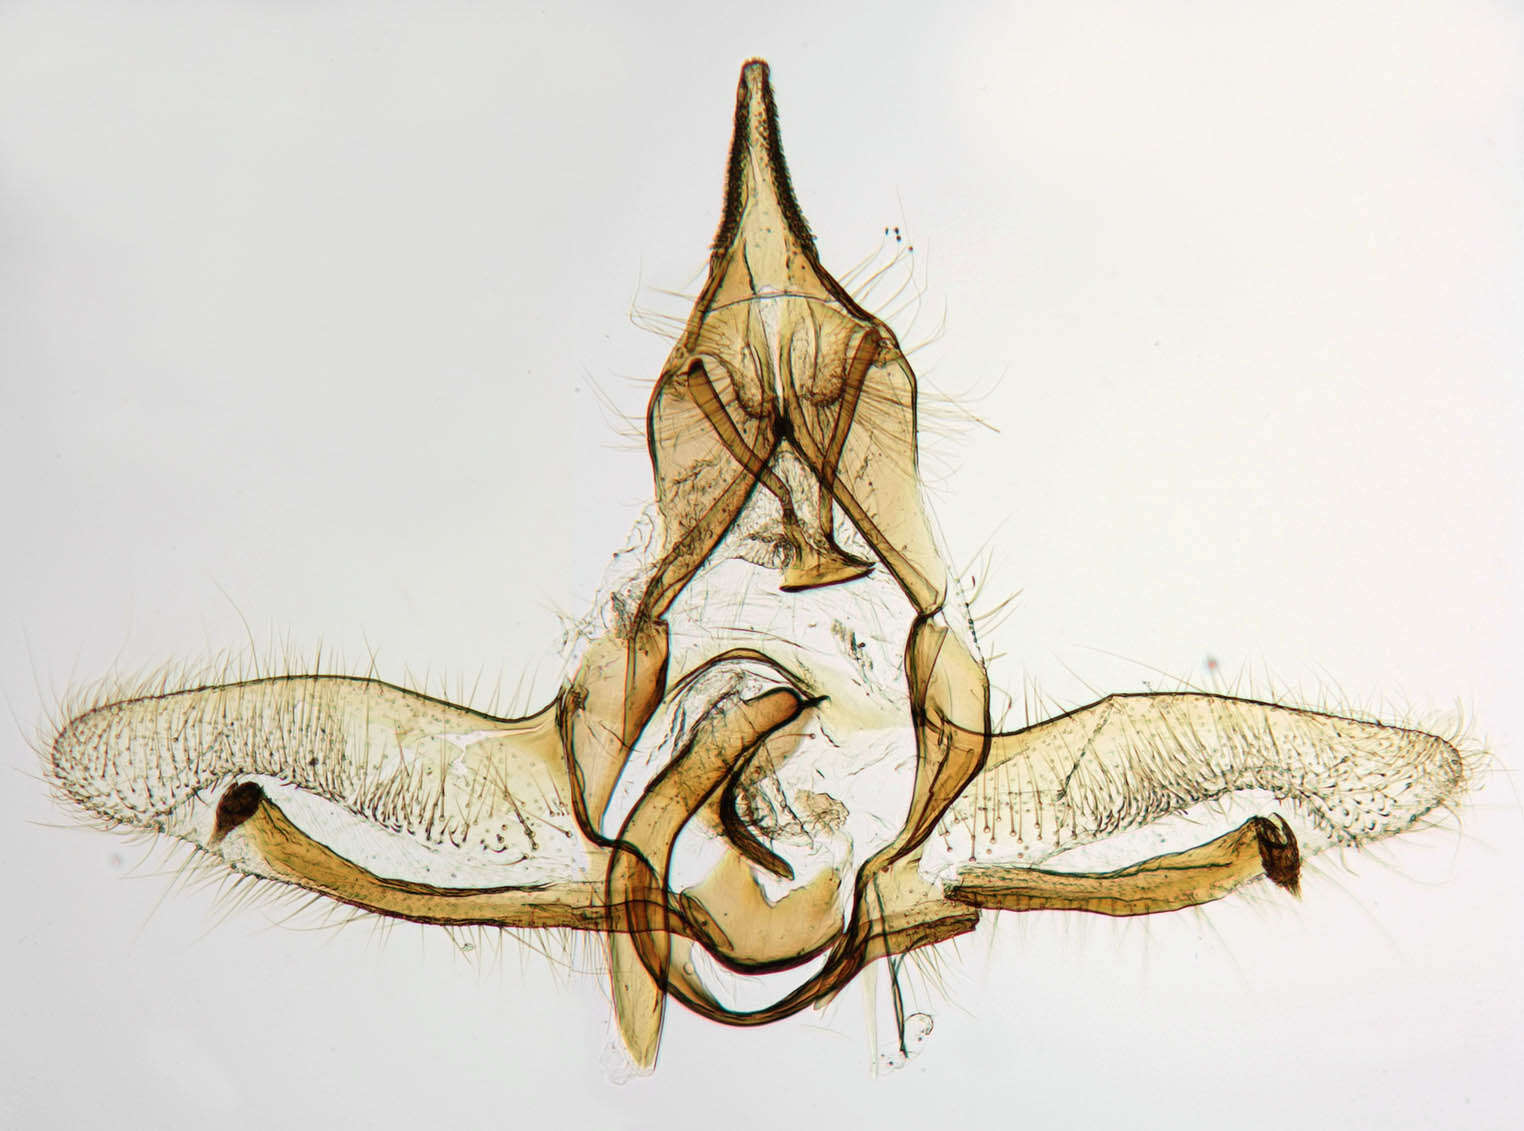 Image of Cnephasia stephensiana Doubleday 1849